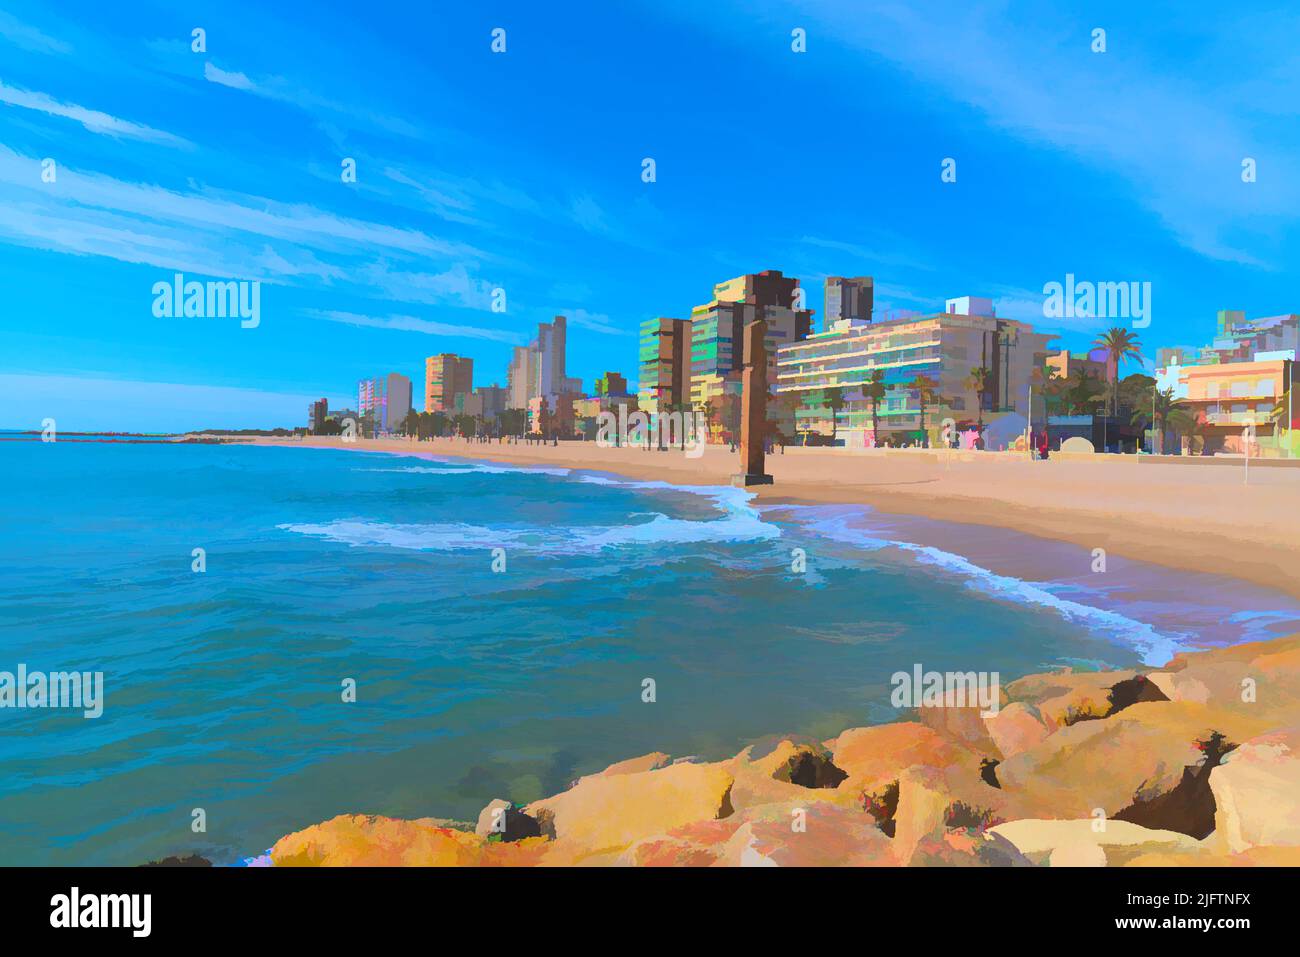 El Campello beach Costa Blanca Spain near Benidorm and Alicante illustration Stock Photo